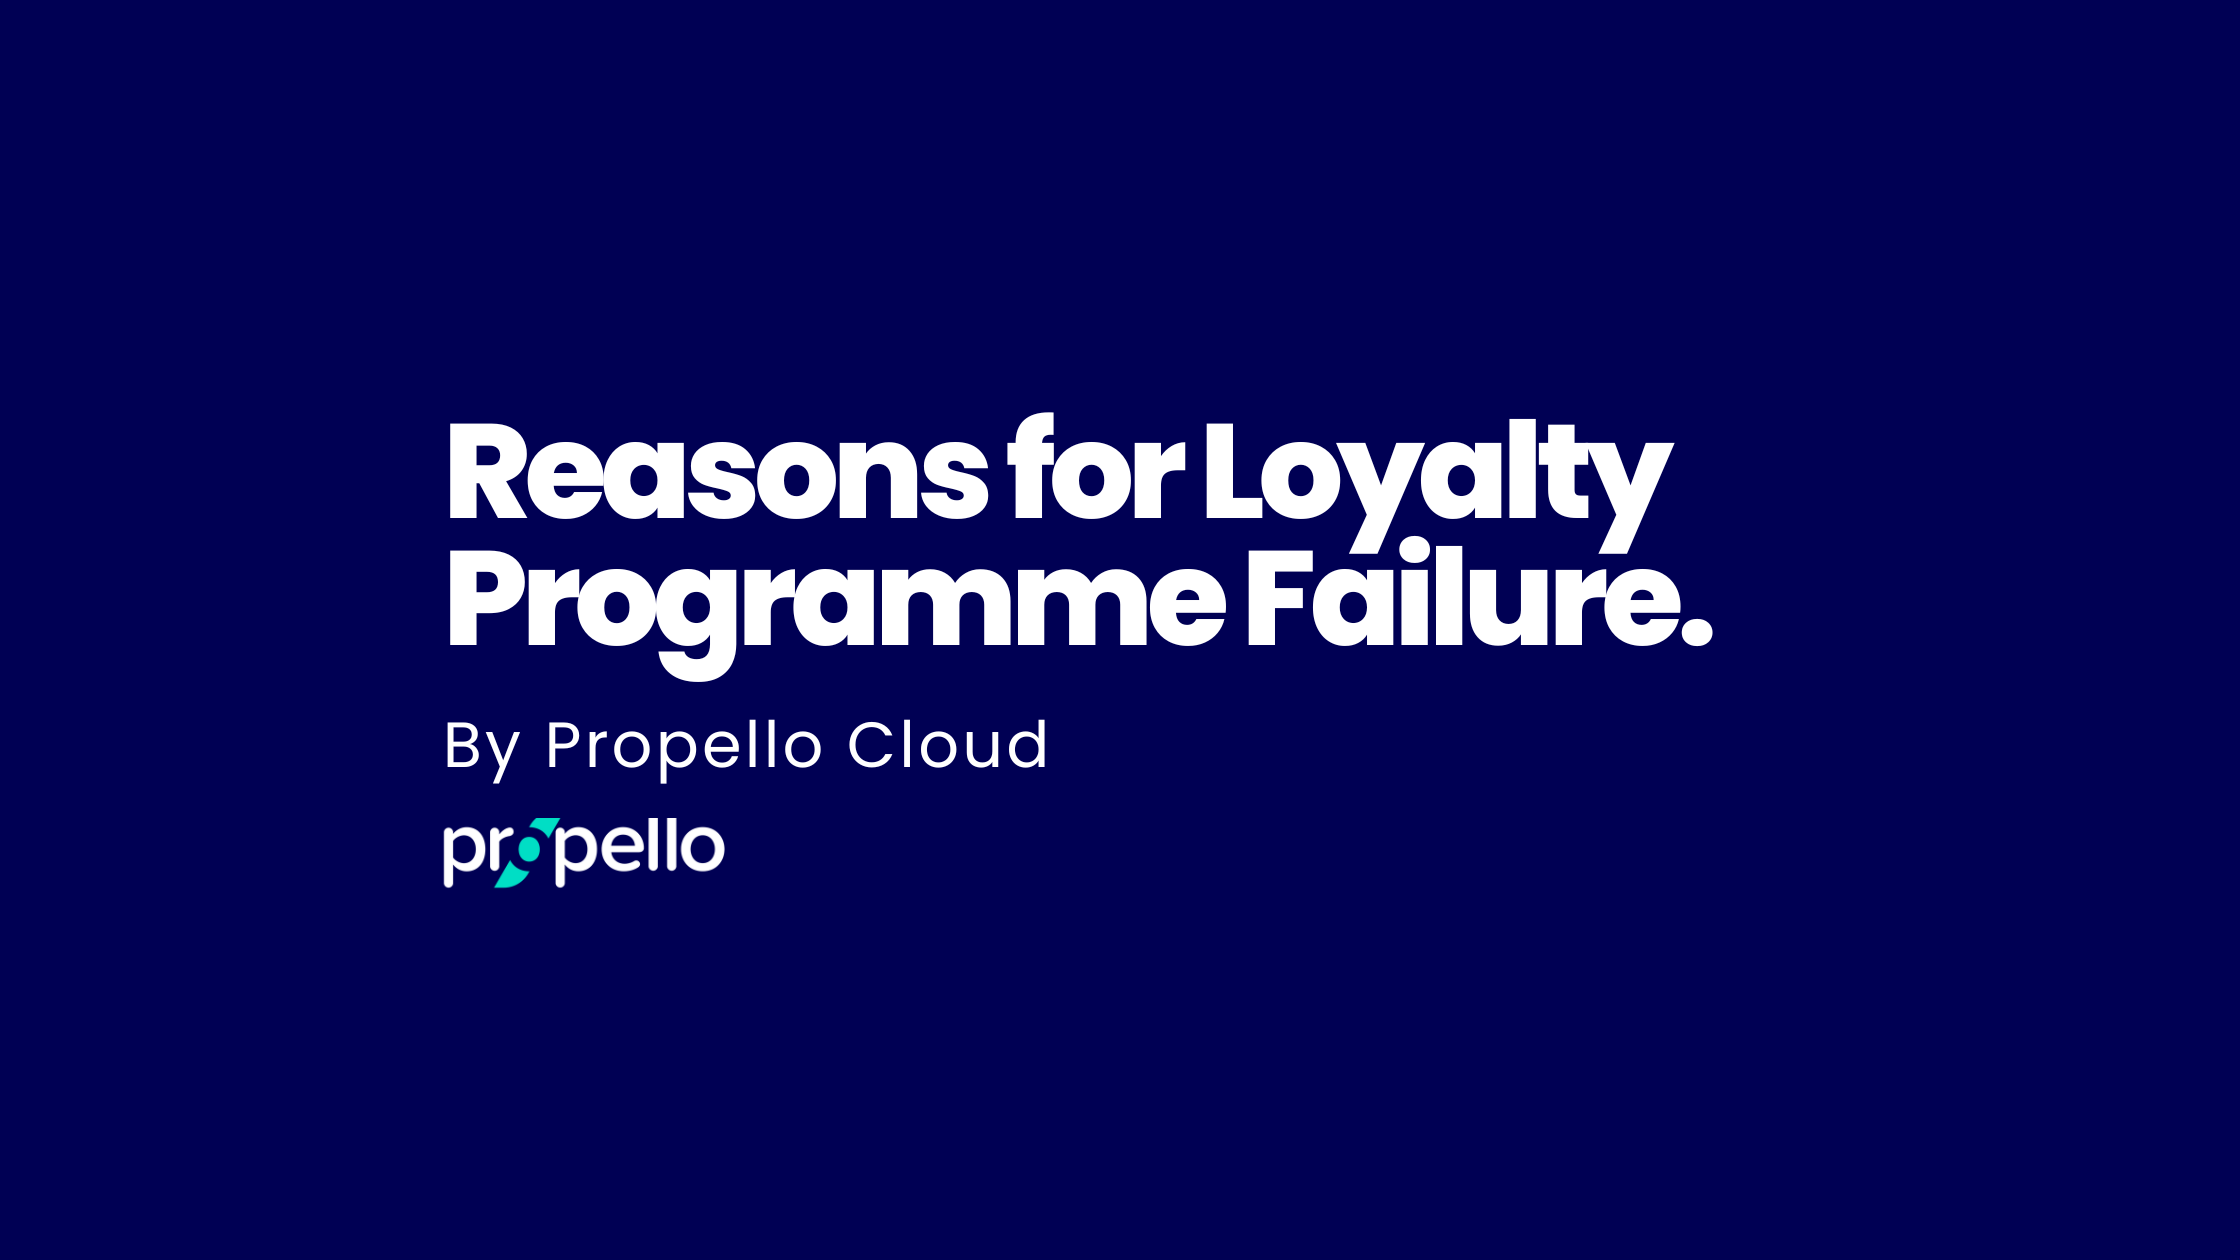 Why Loyalty Programs Fail